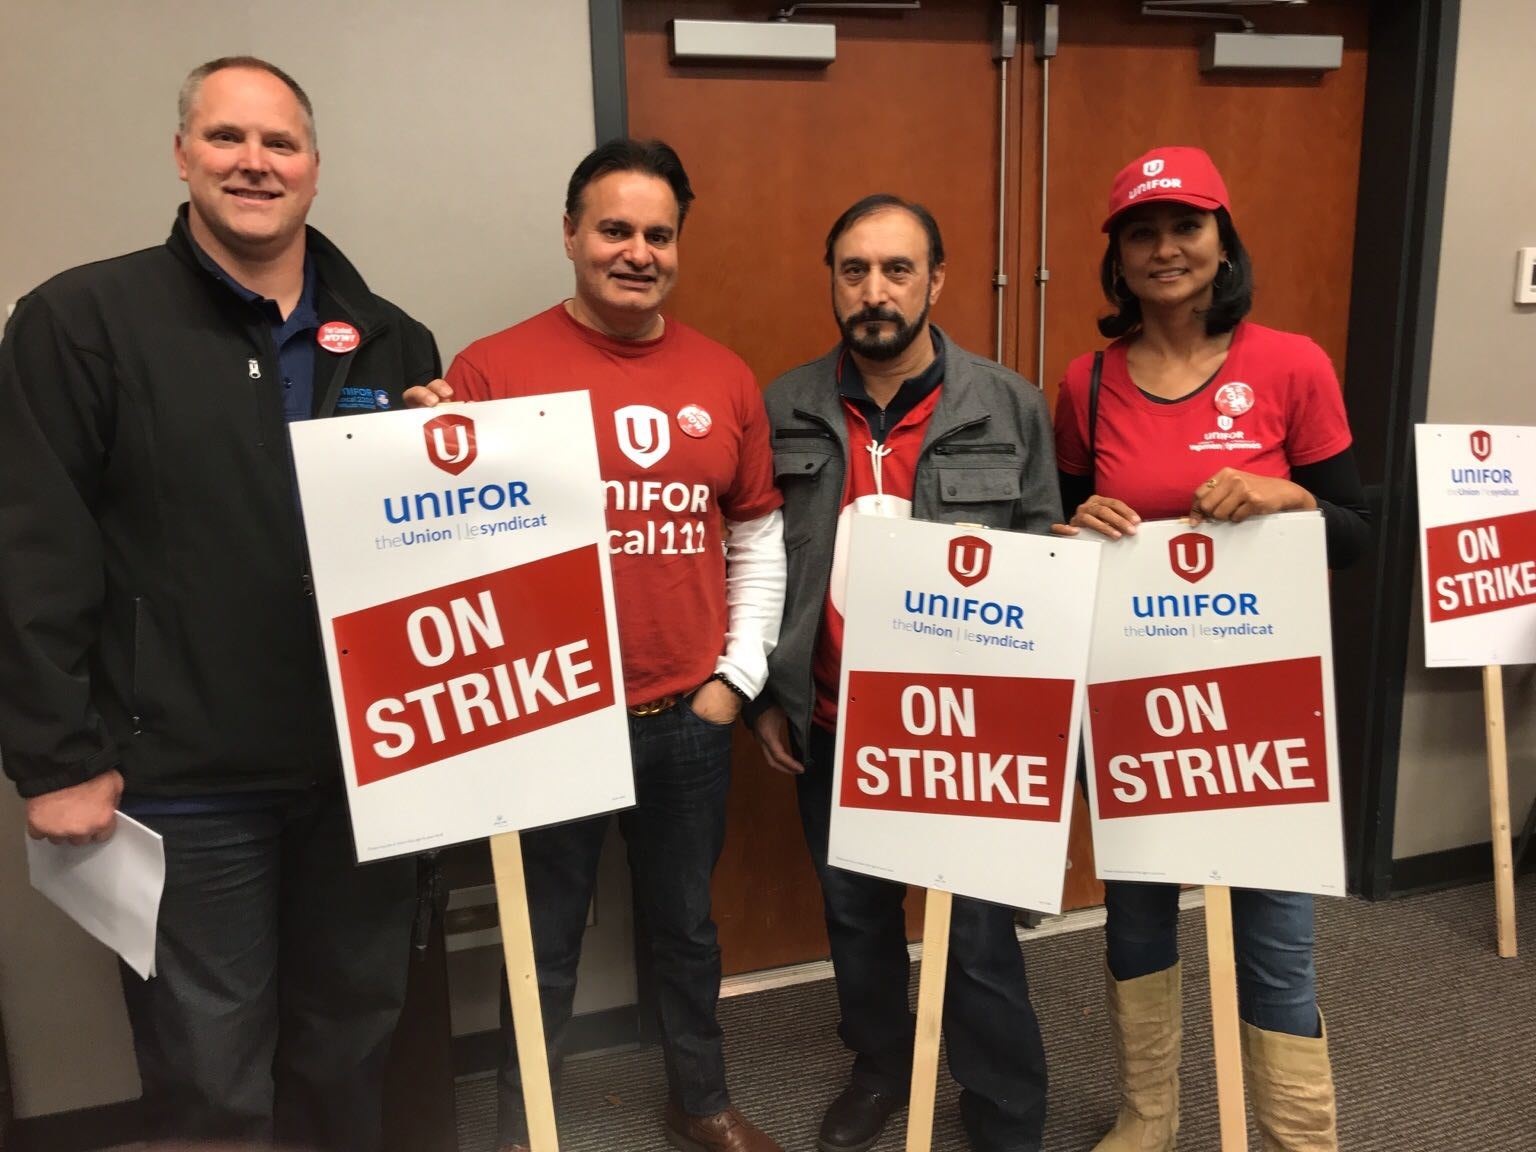 Unifor members hold strike signs.